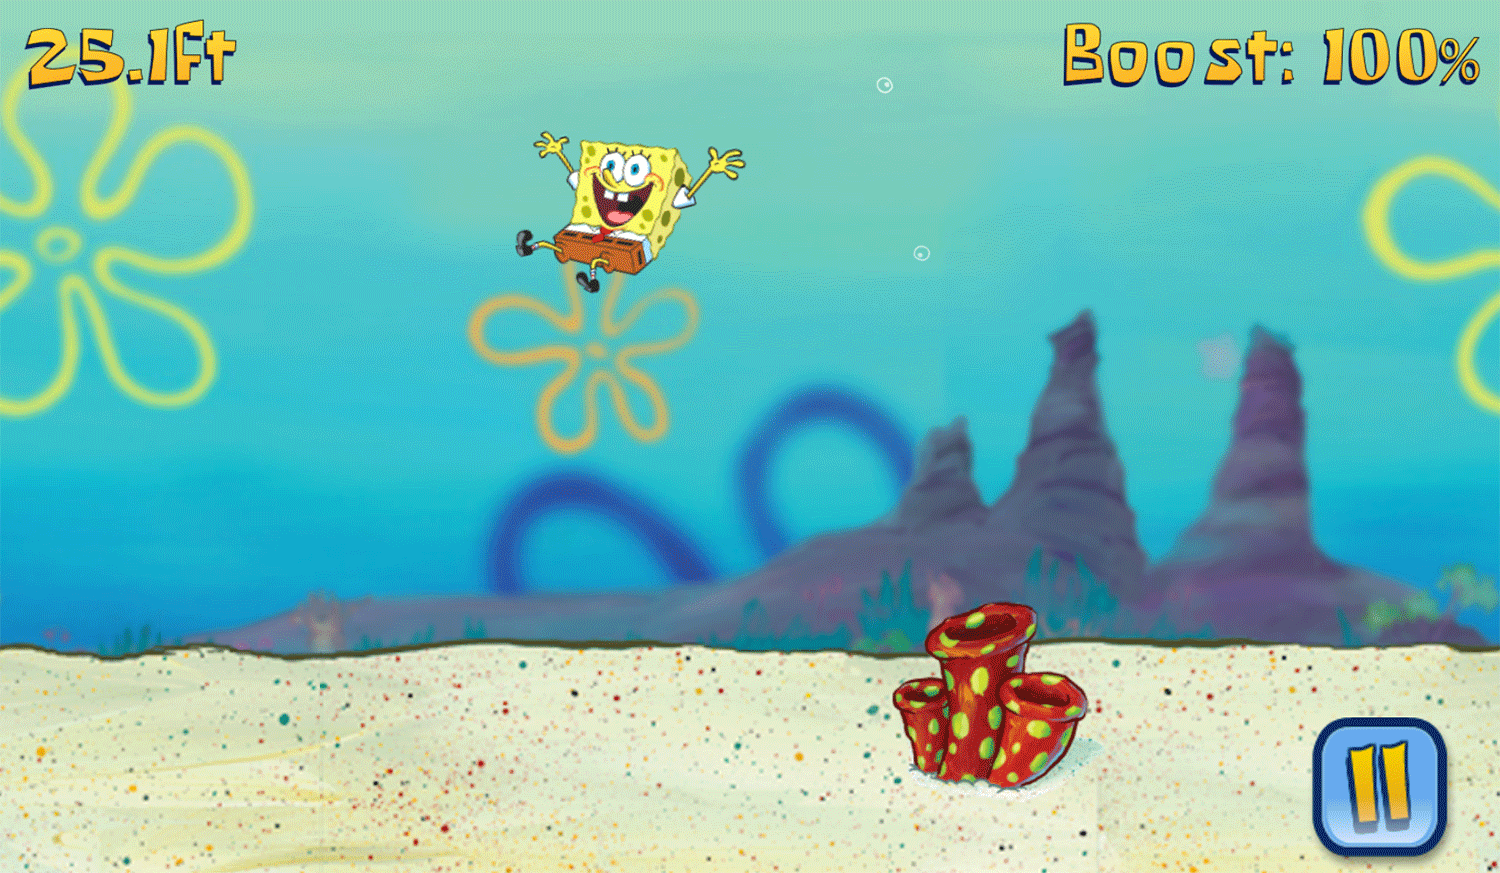 Spongebob Squarepants Tighty Whitey Tumble Game Screenshot.